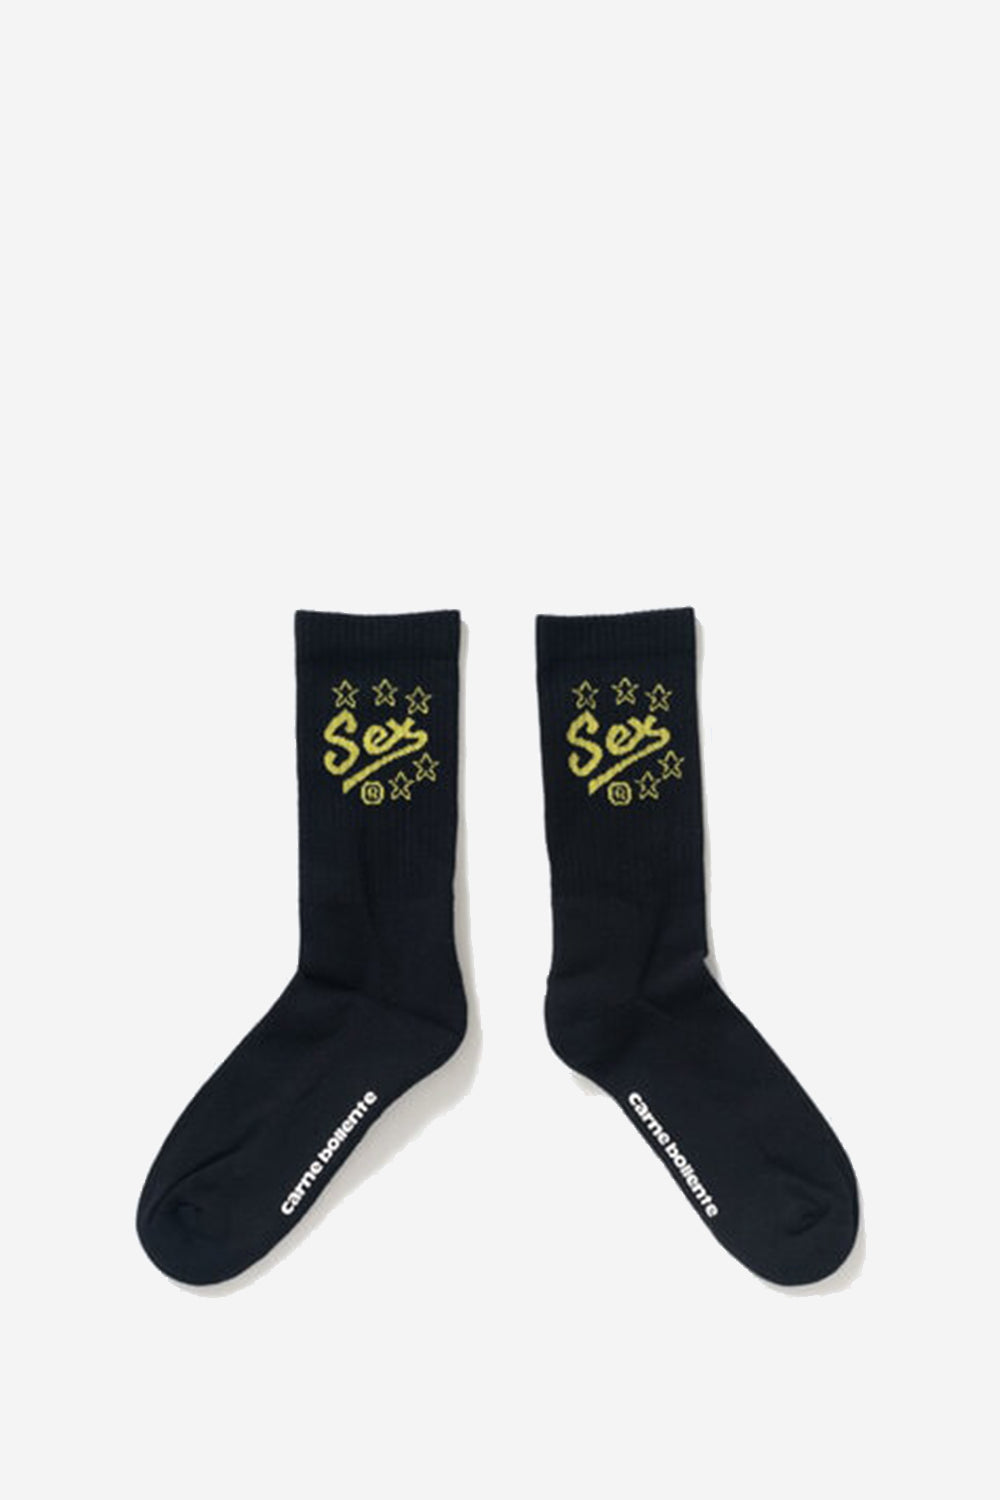 Socks Shocks, black